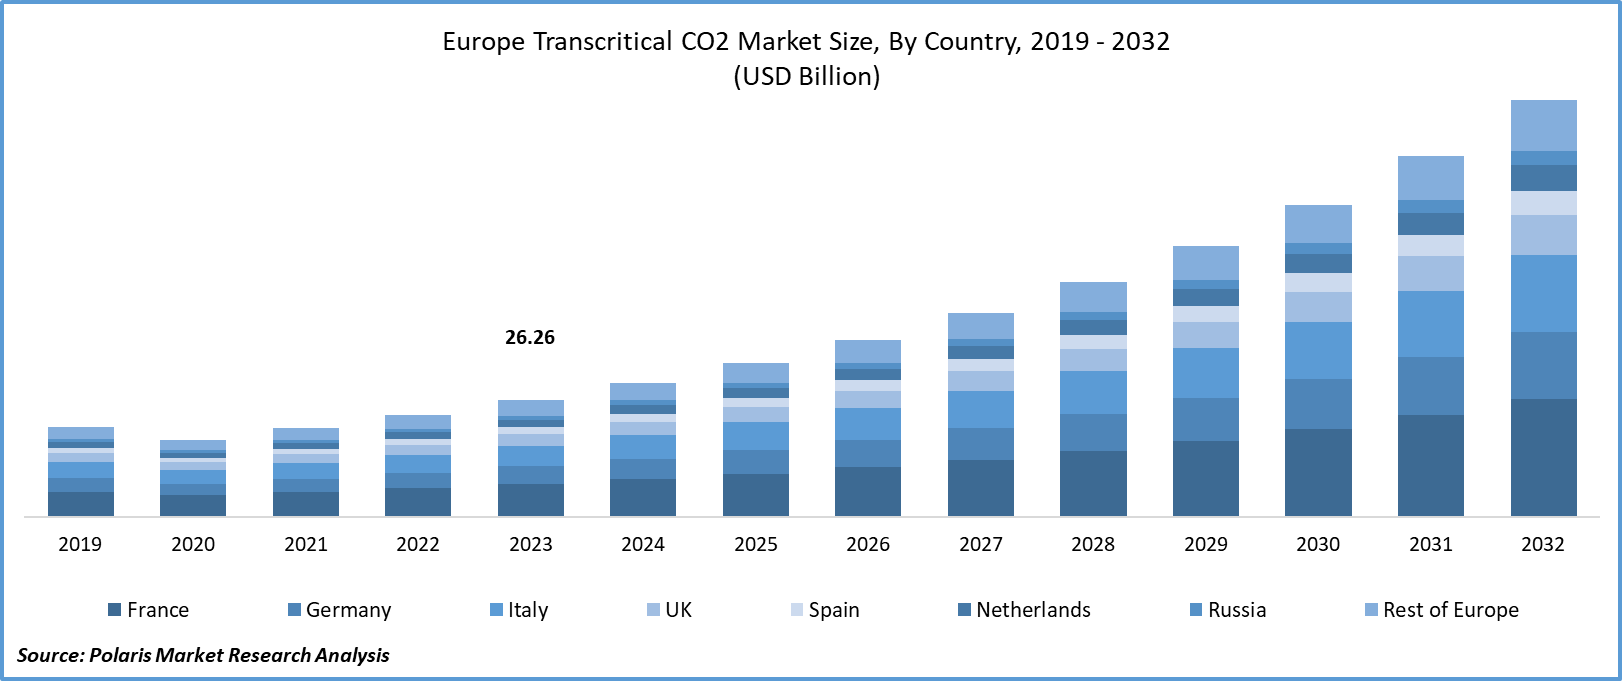 Europe Transcritical CO2 Market Size